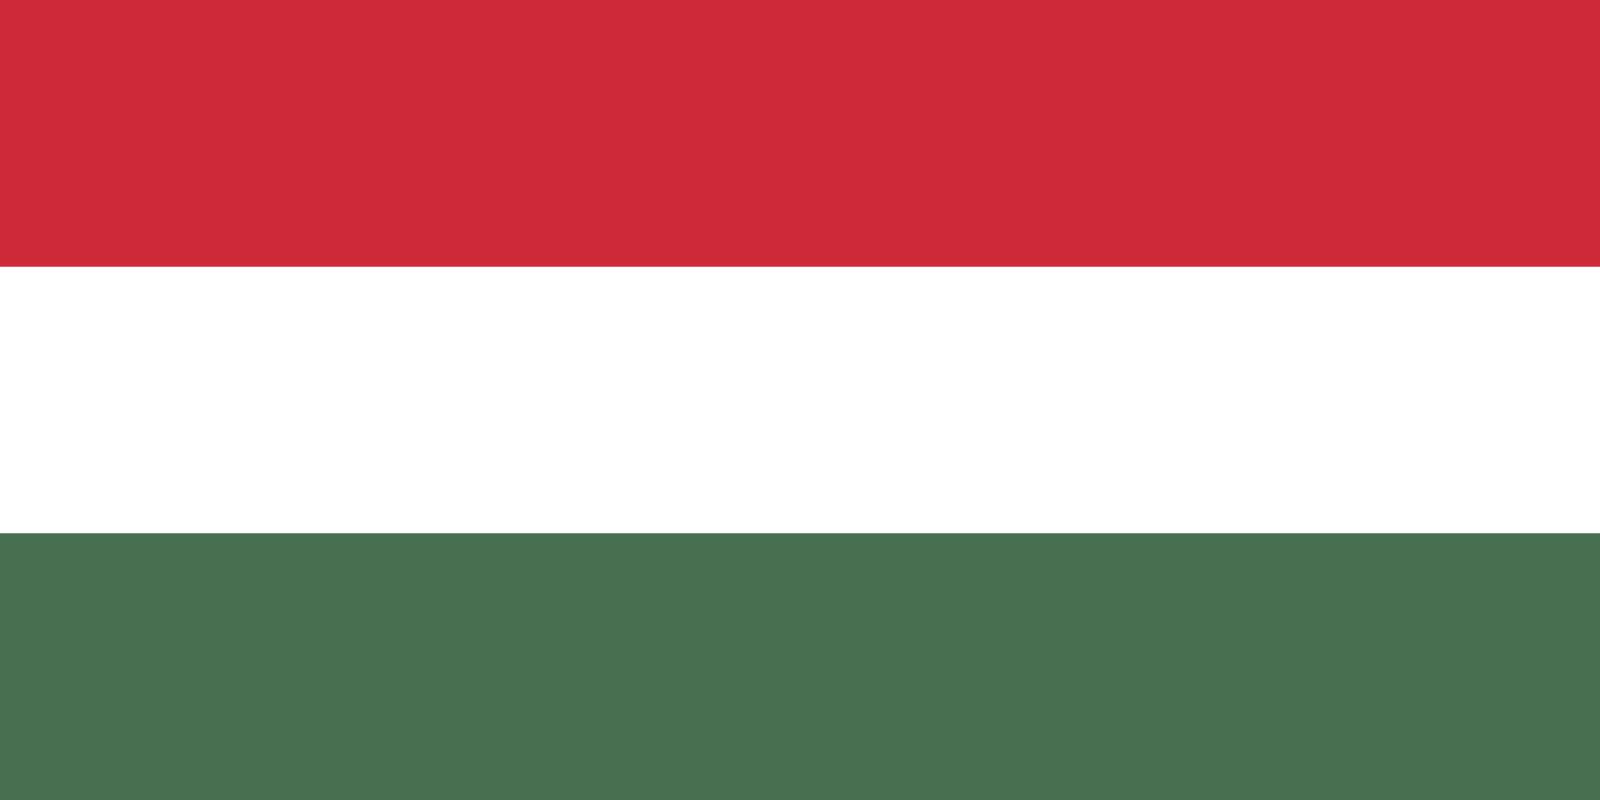 Flagge Ungarns Welt Flaggen De